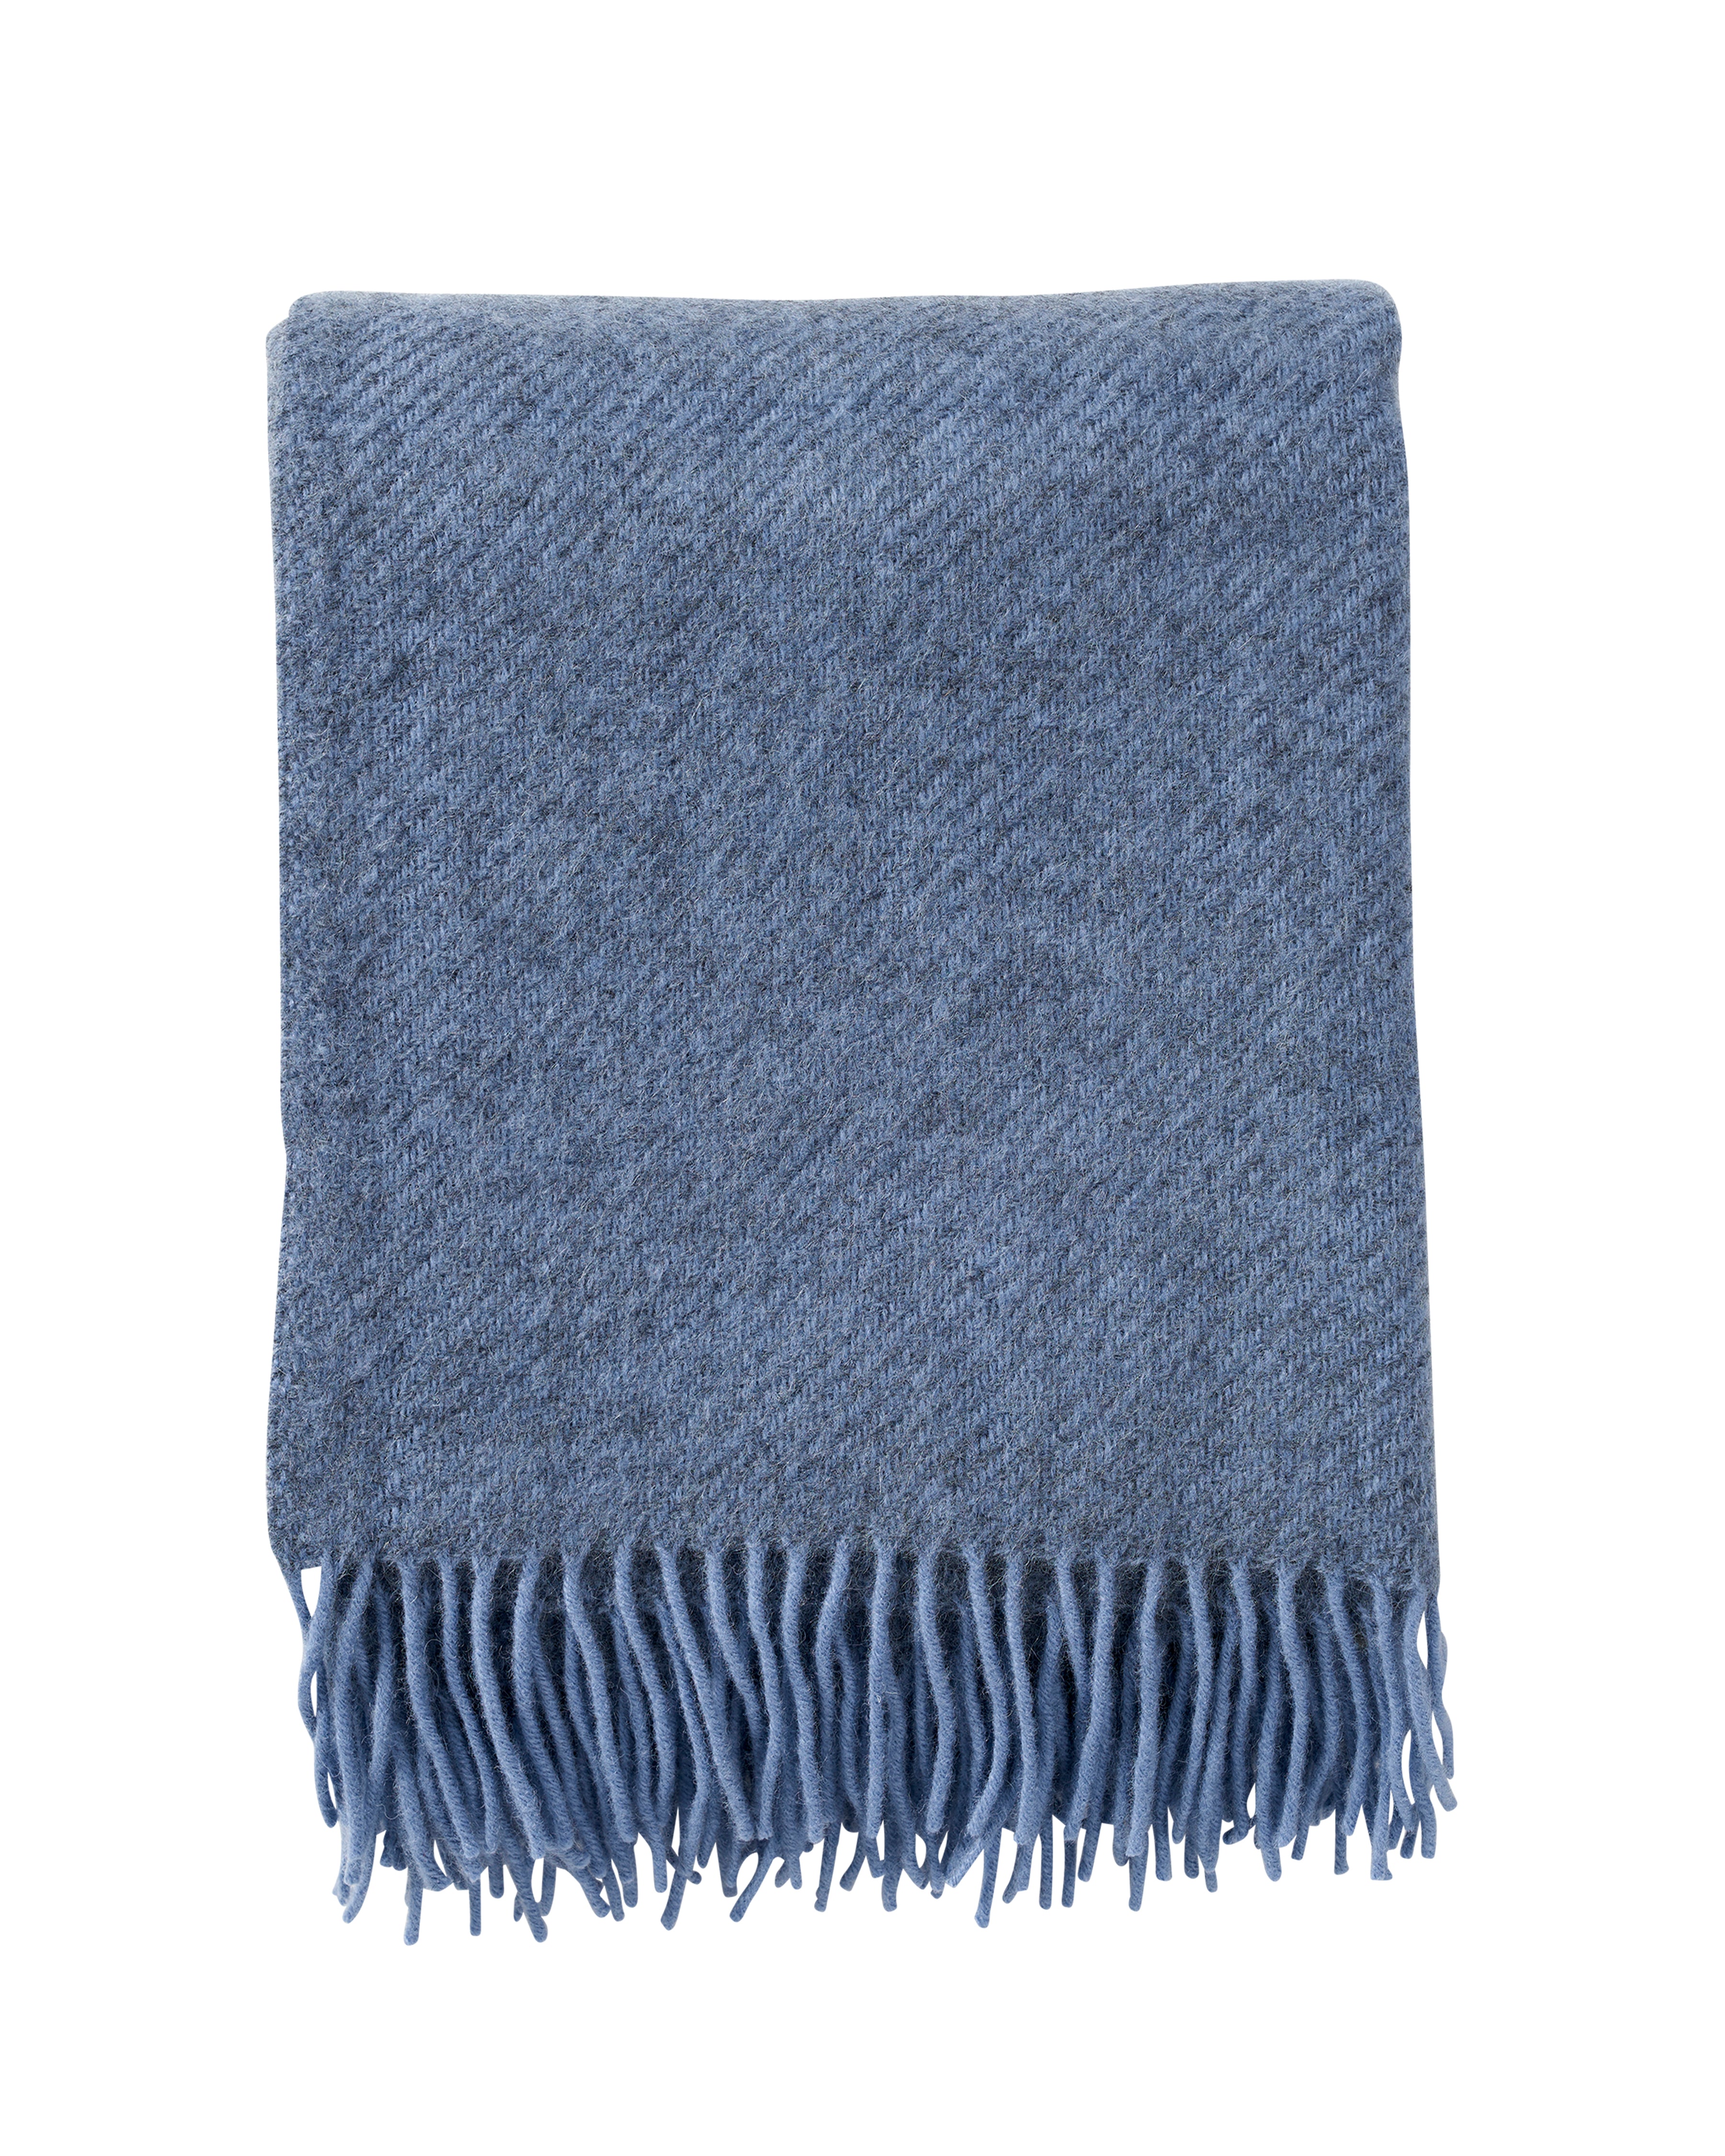 'Gotland Infinity Blue Blanket'